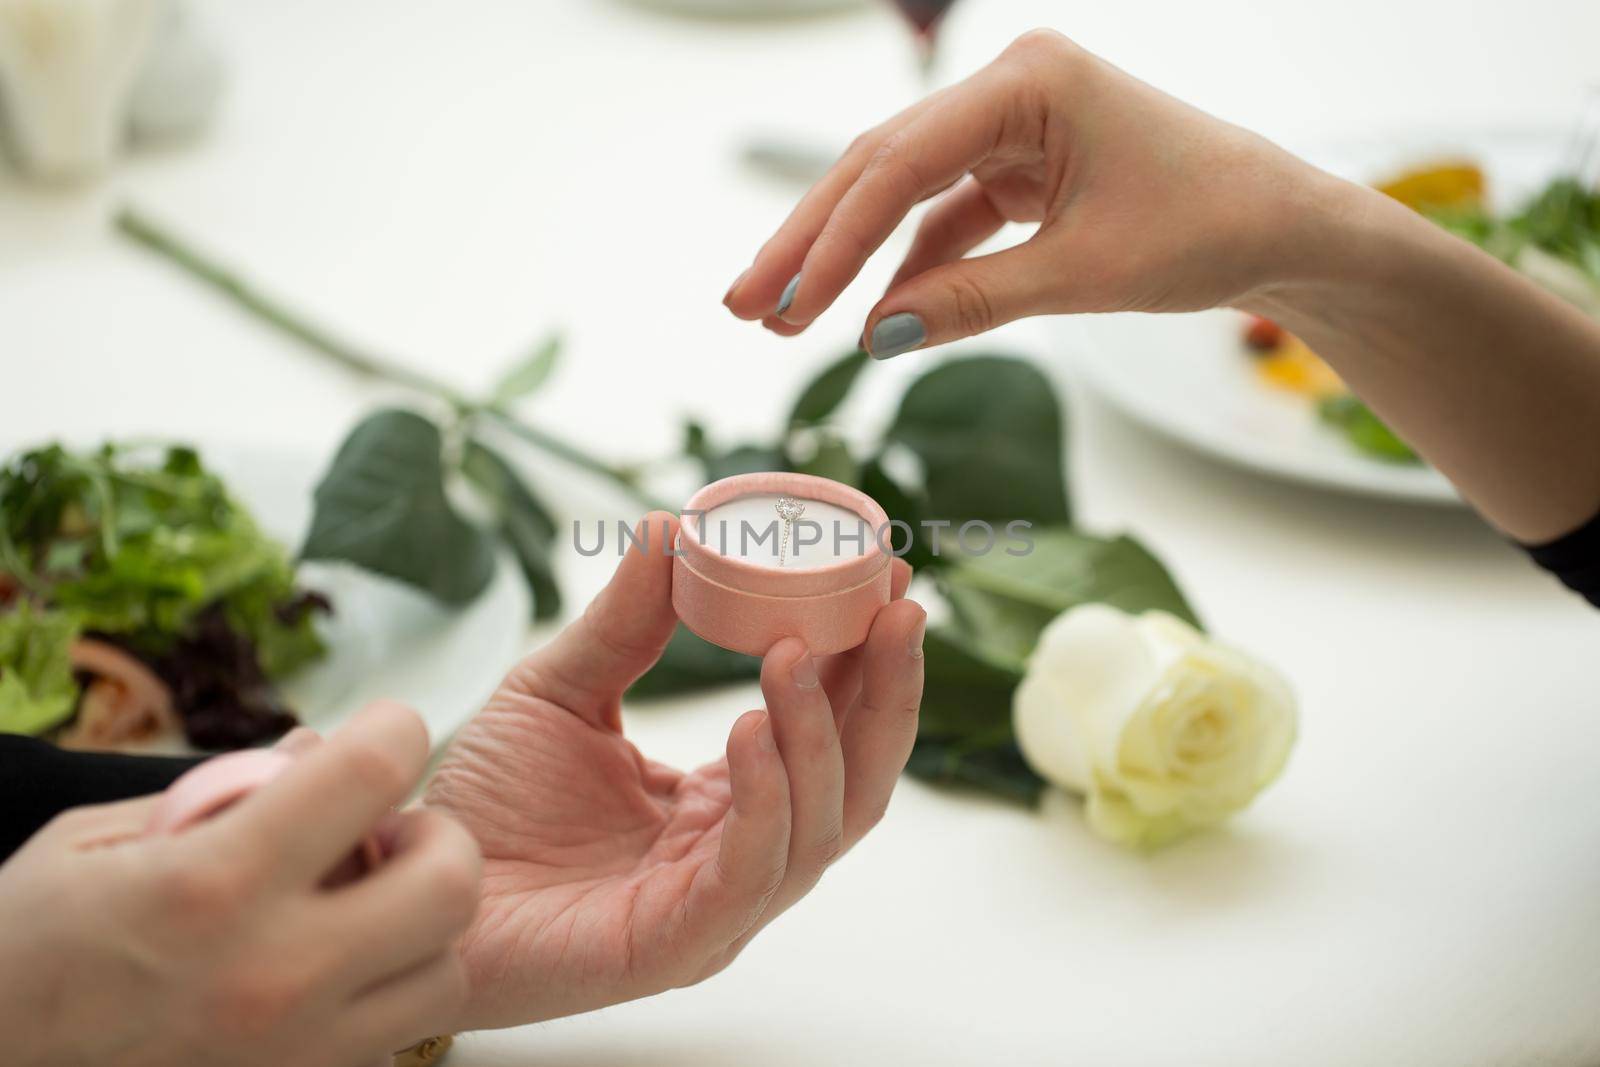 Man making marriage proposal to girlfriend at restaurant, closeup